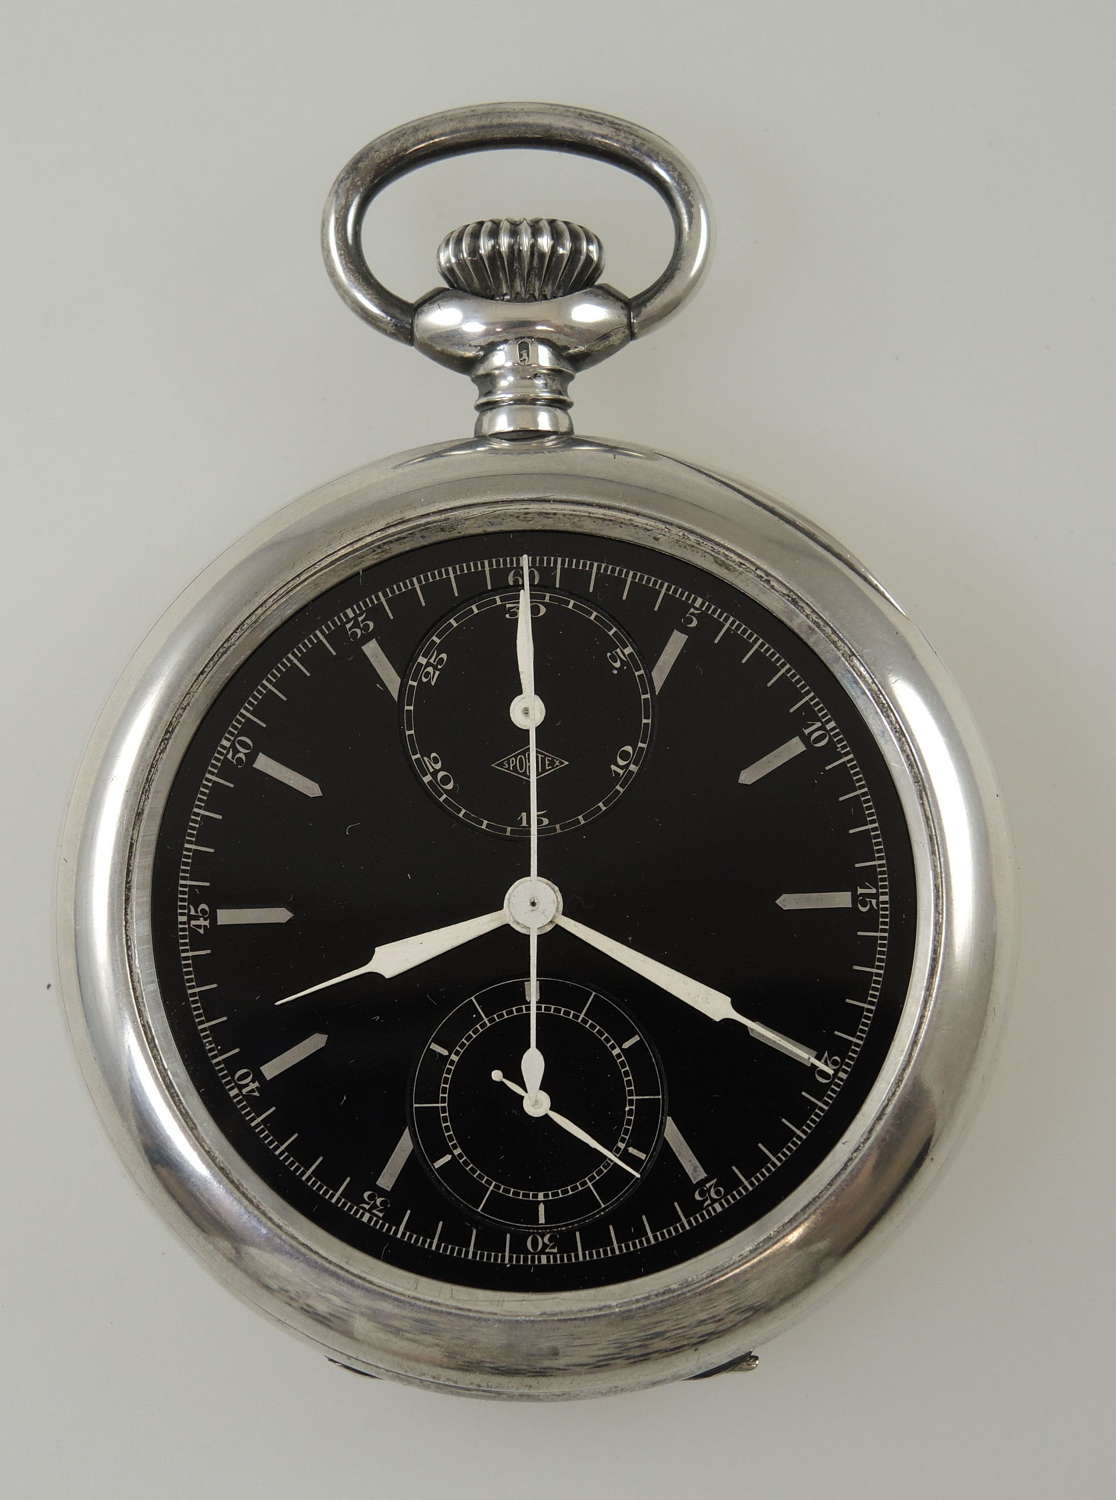 Premier Prix chronograph by Sportex, Observatoire Neuchatel c1936